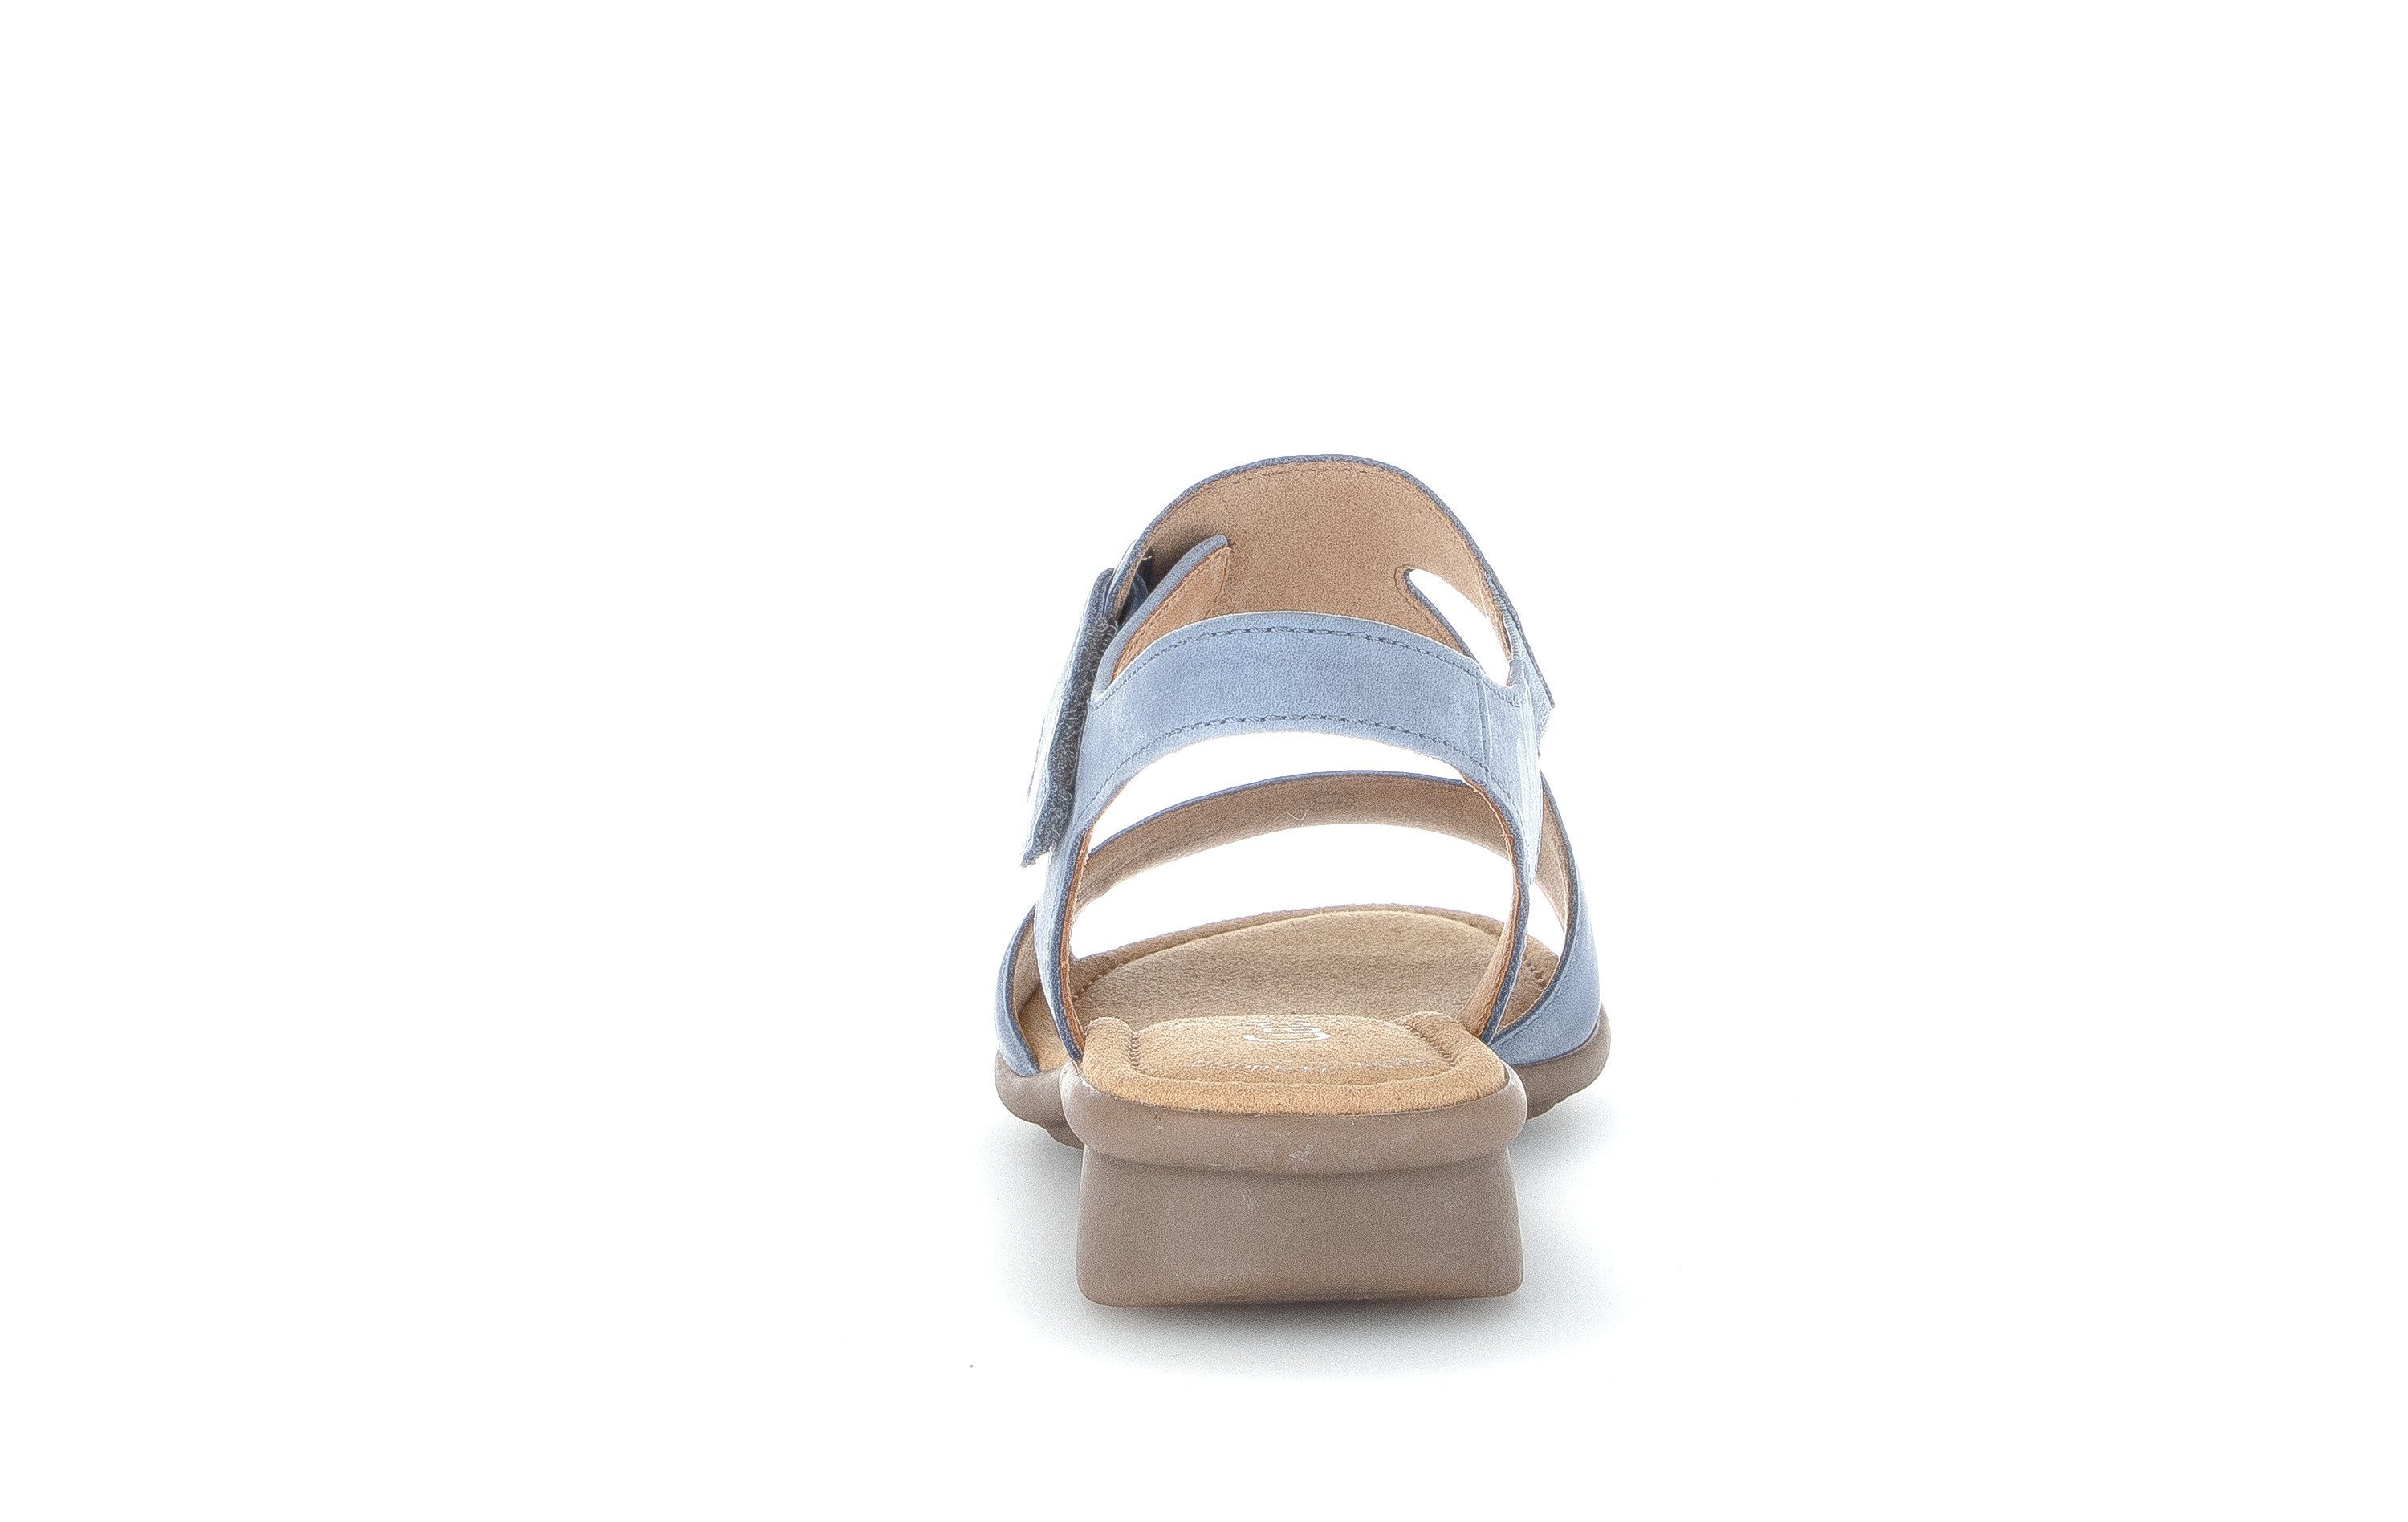 Sandale Comfort Gabor